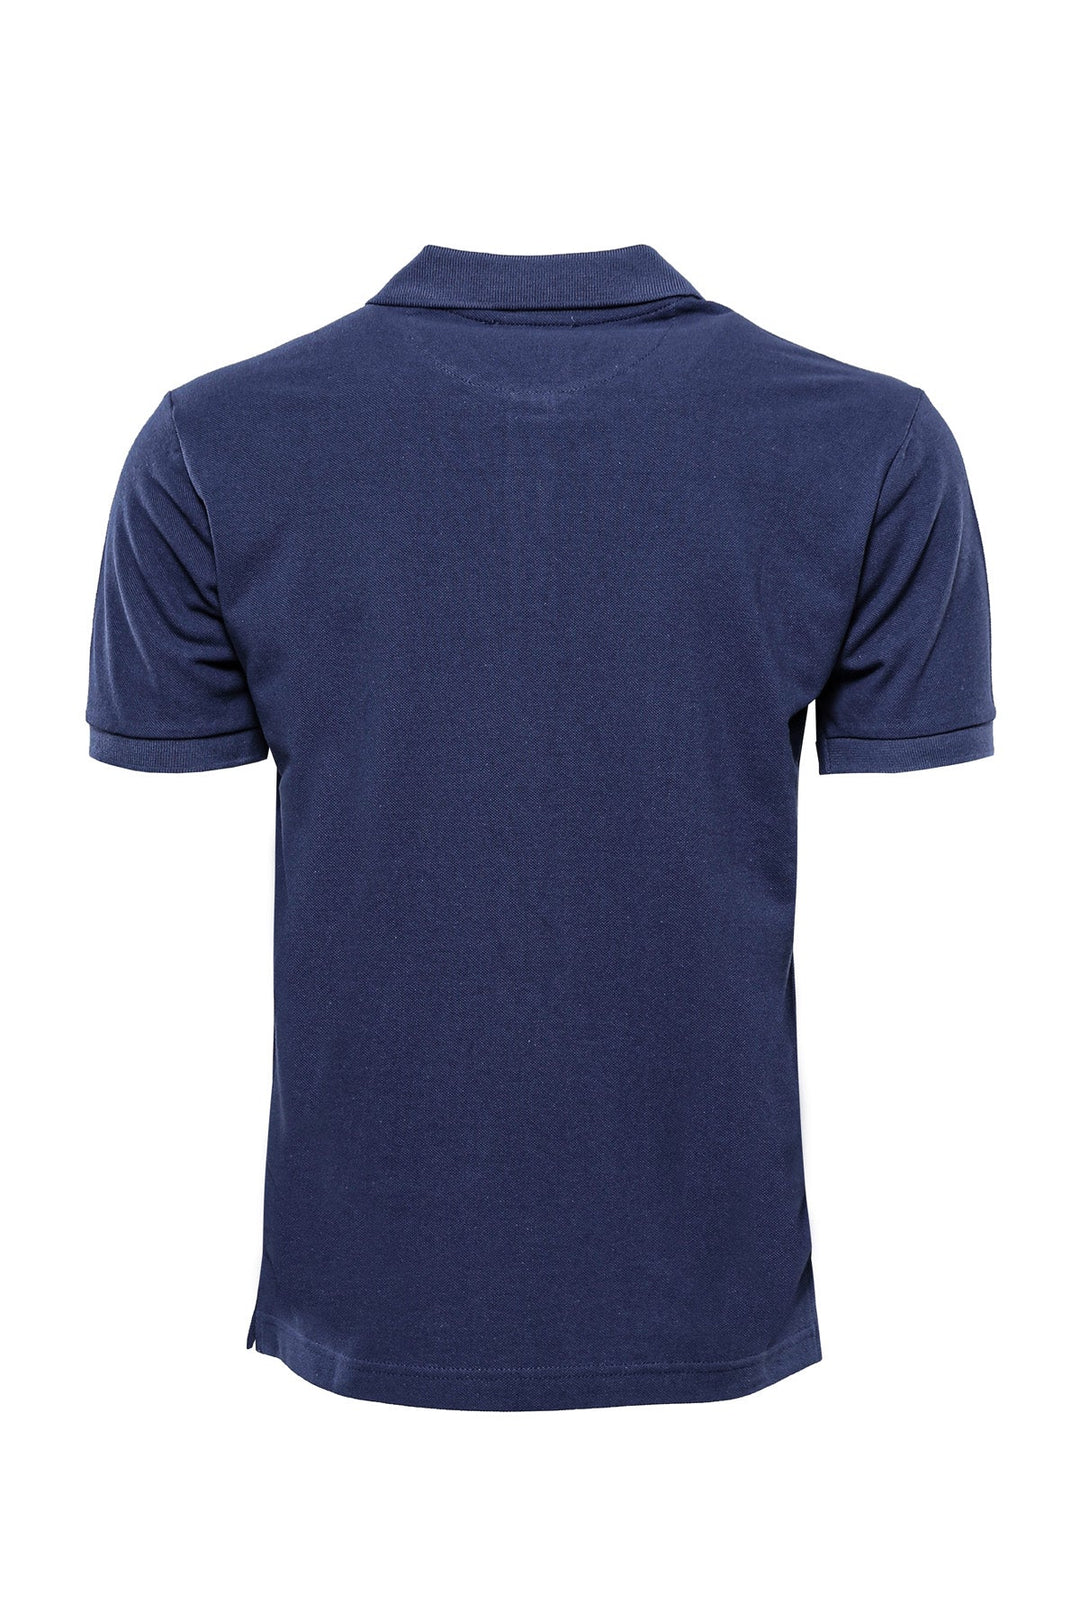 Polo Yaka Oxford Lacivert T-shirt - Wessi